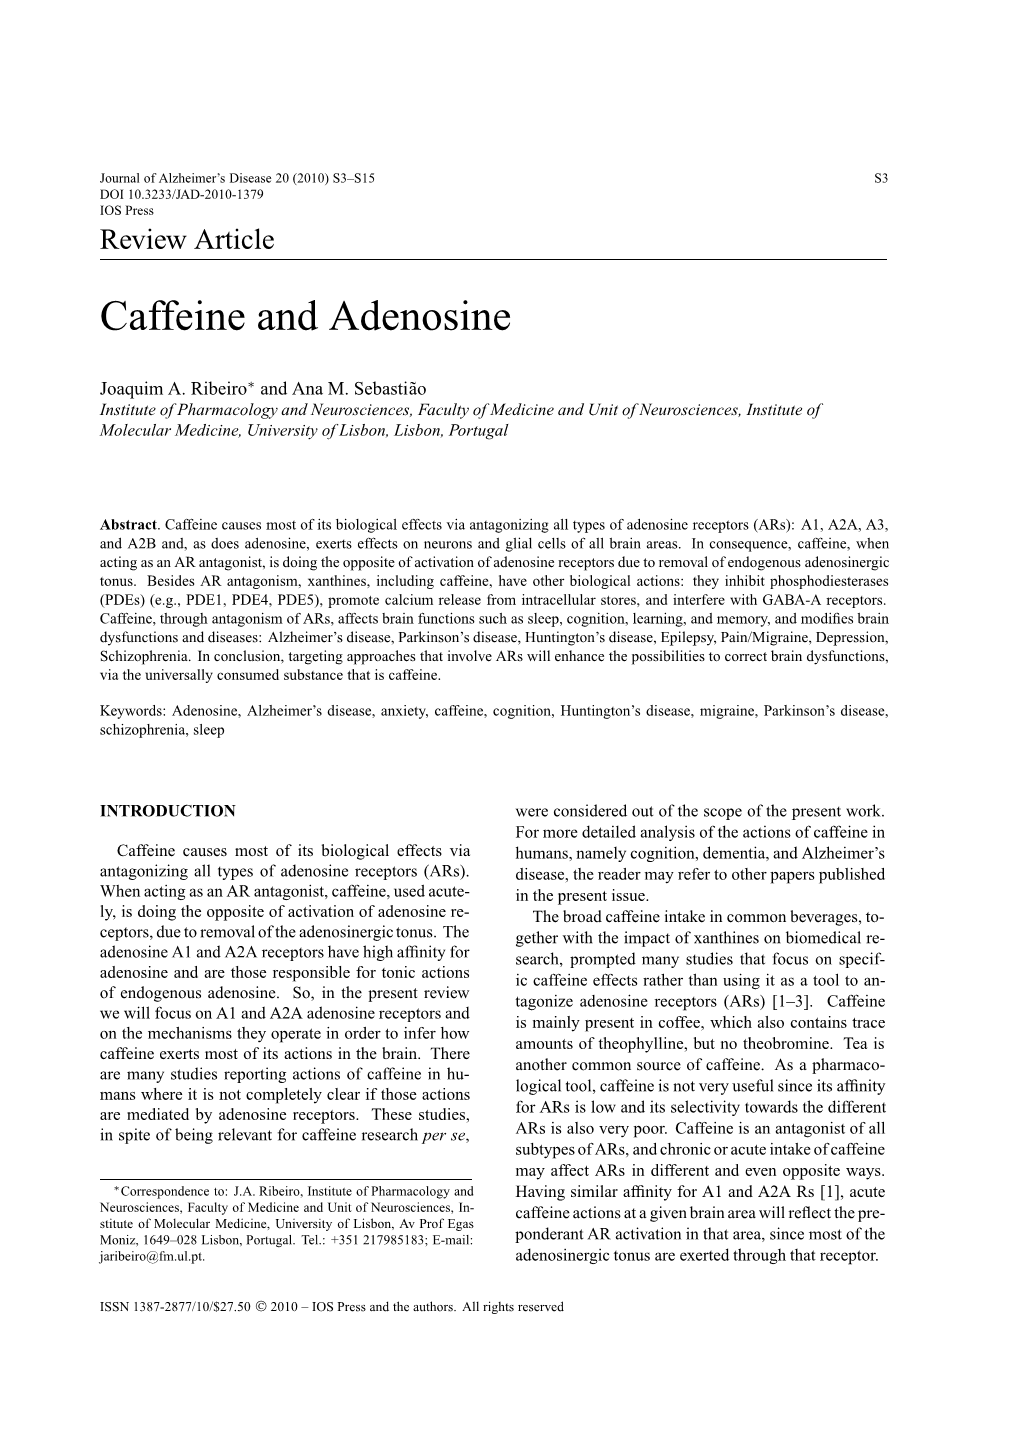 Caffeine and Adenosine